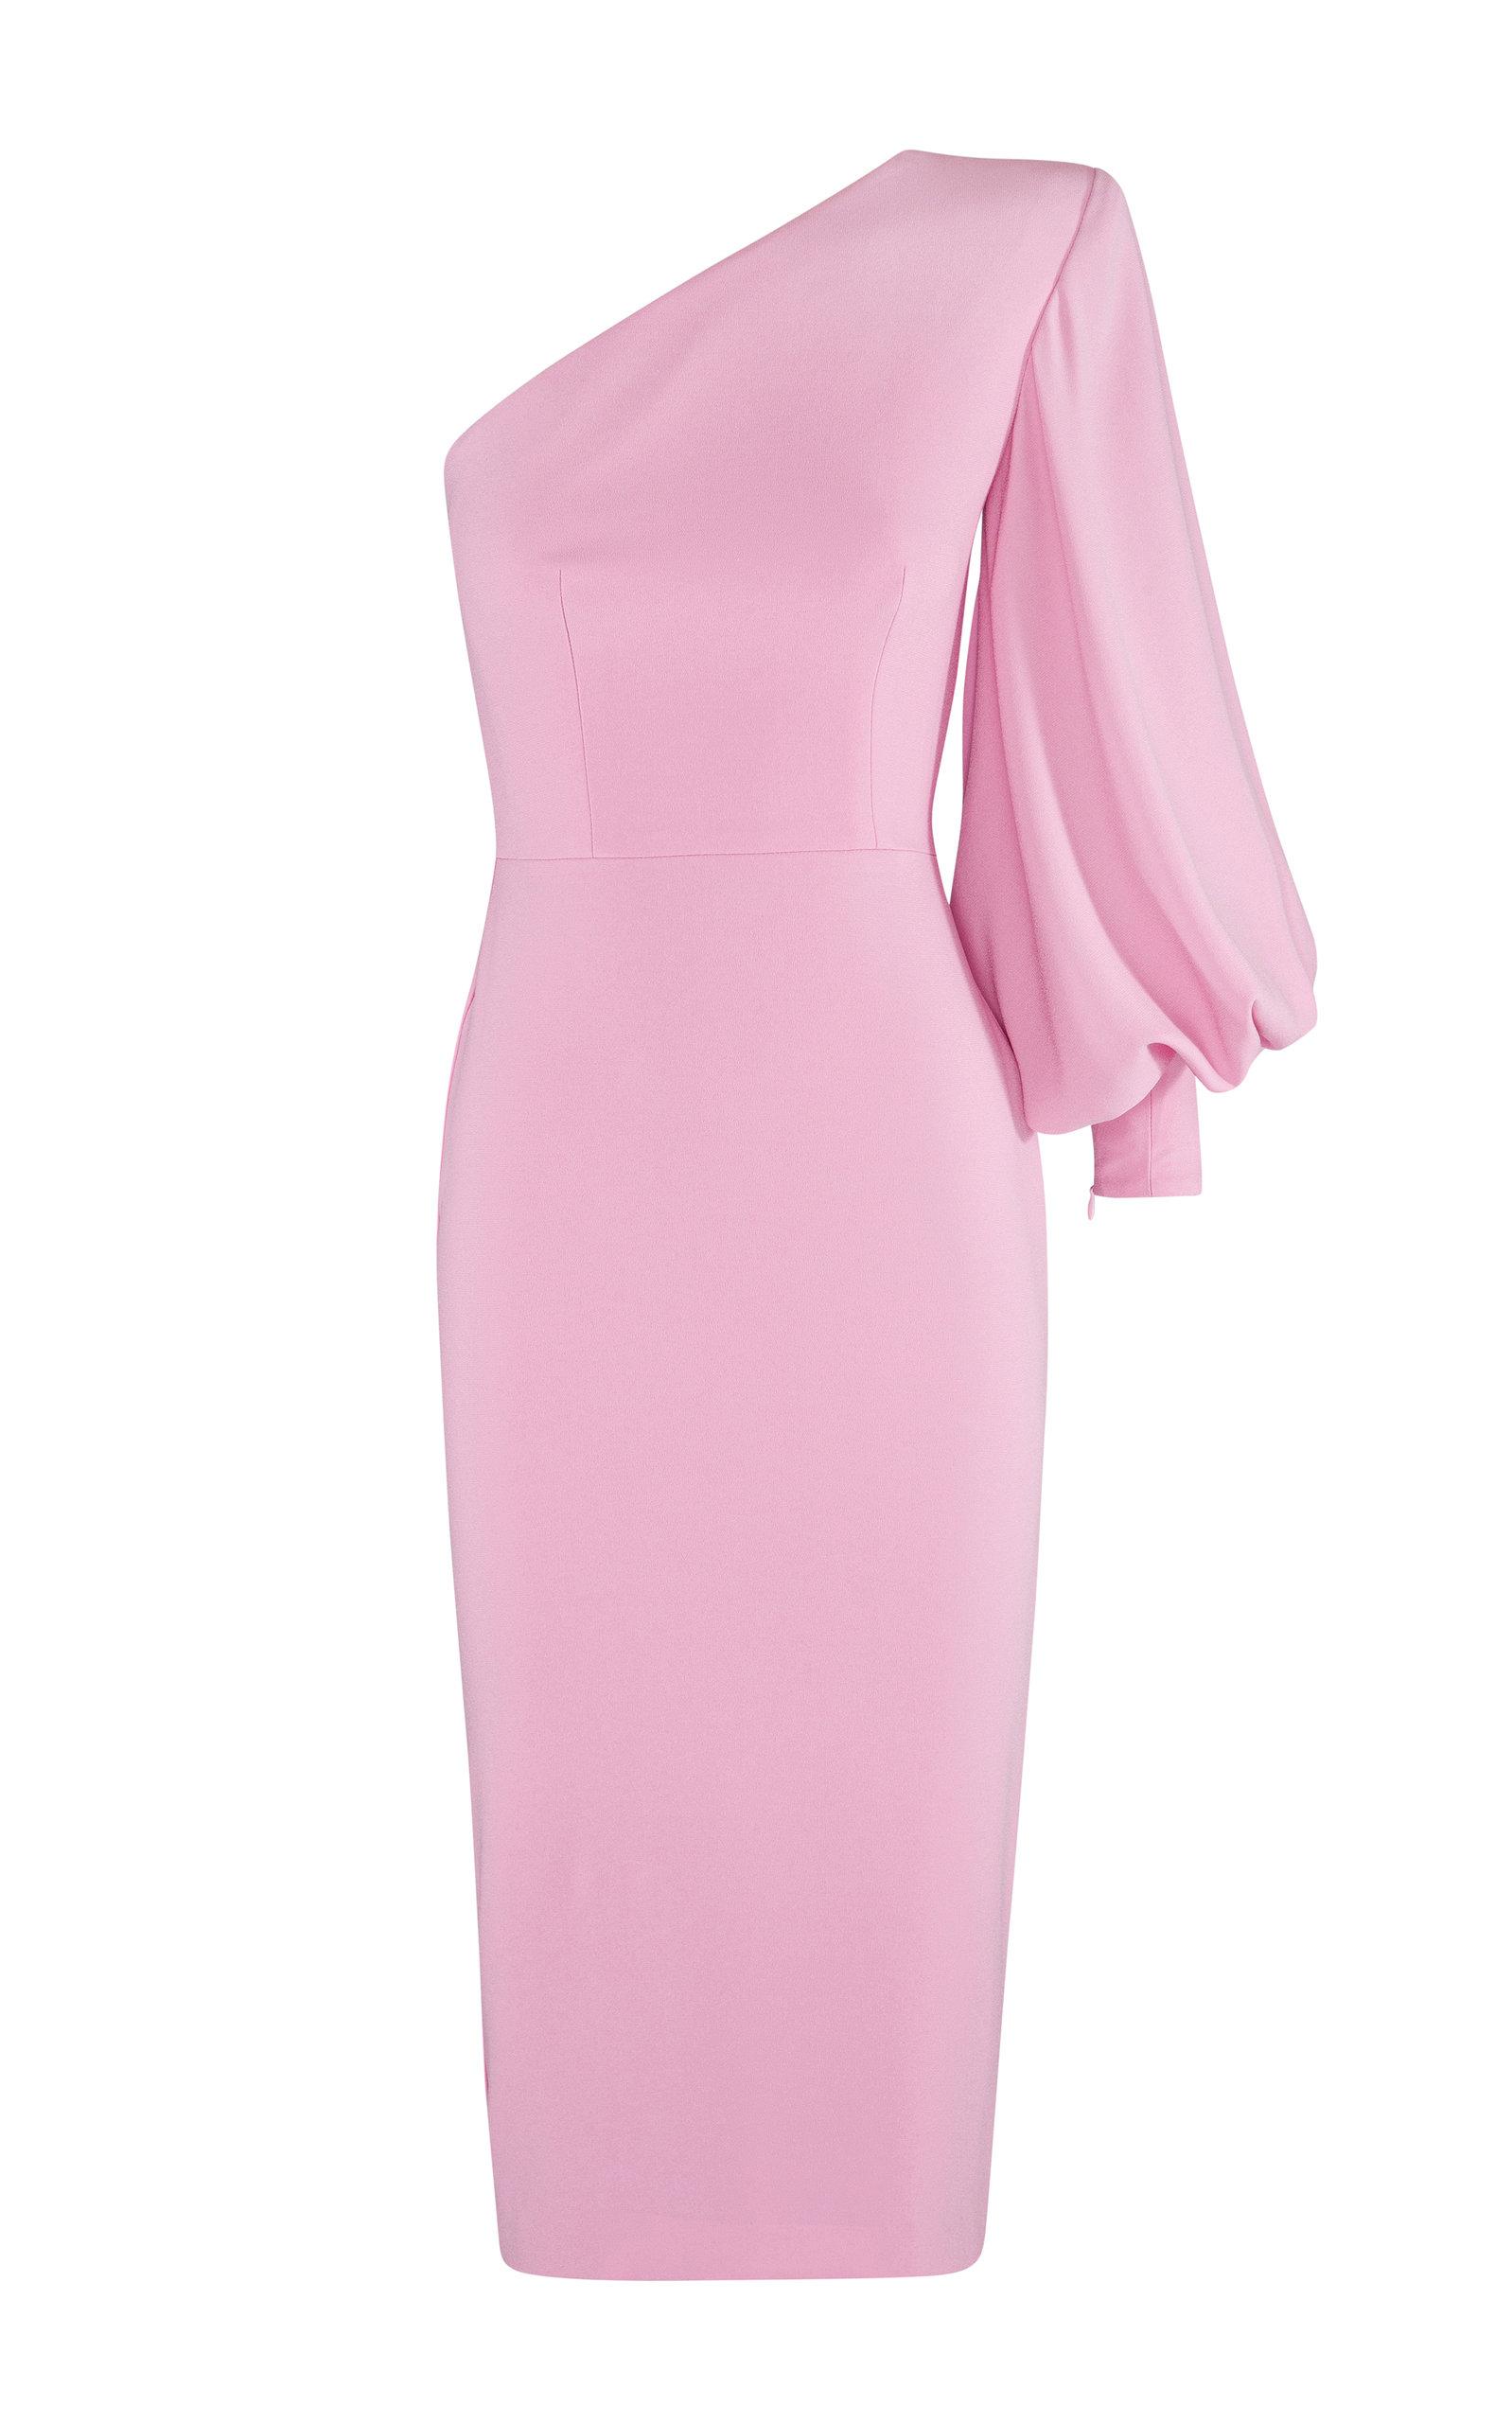 Alex Perry Warner One-shoulder Crepe Midi Dress in Pink | Lyst